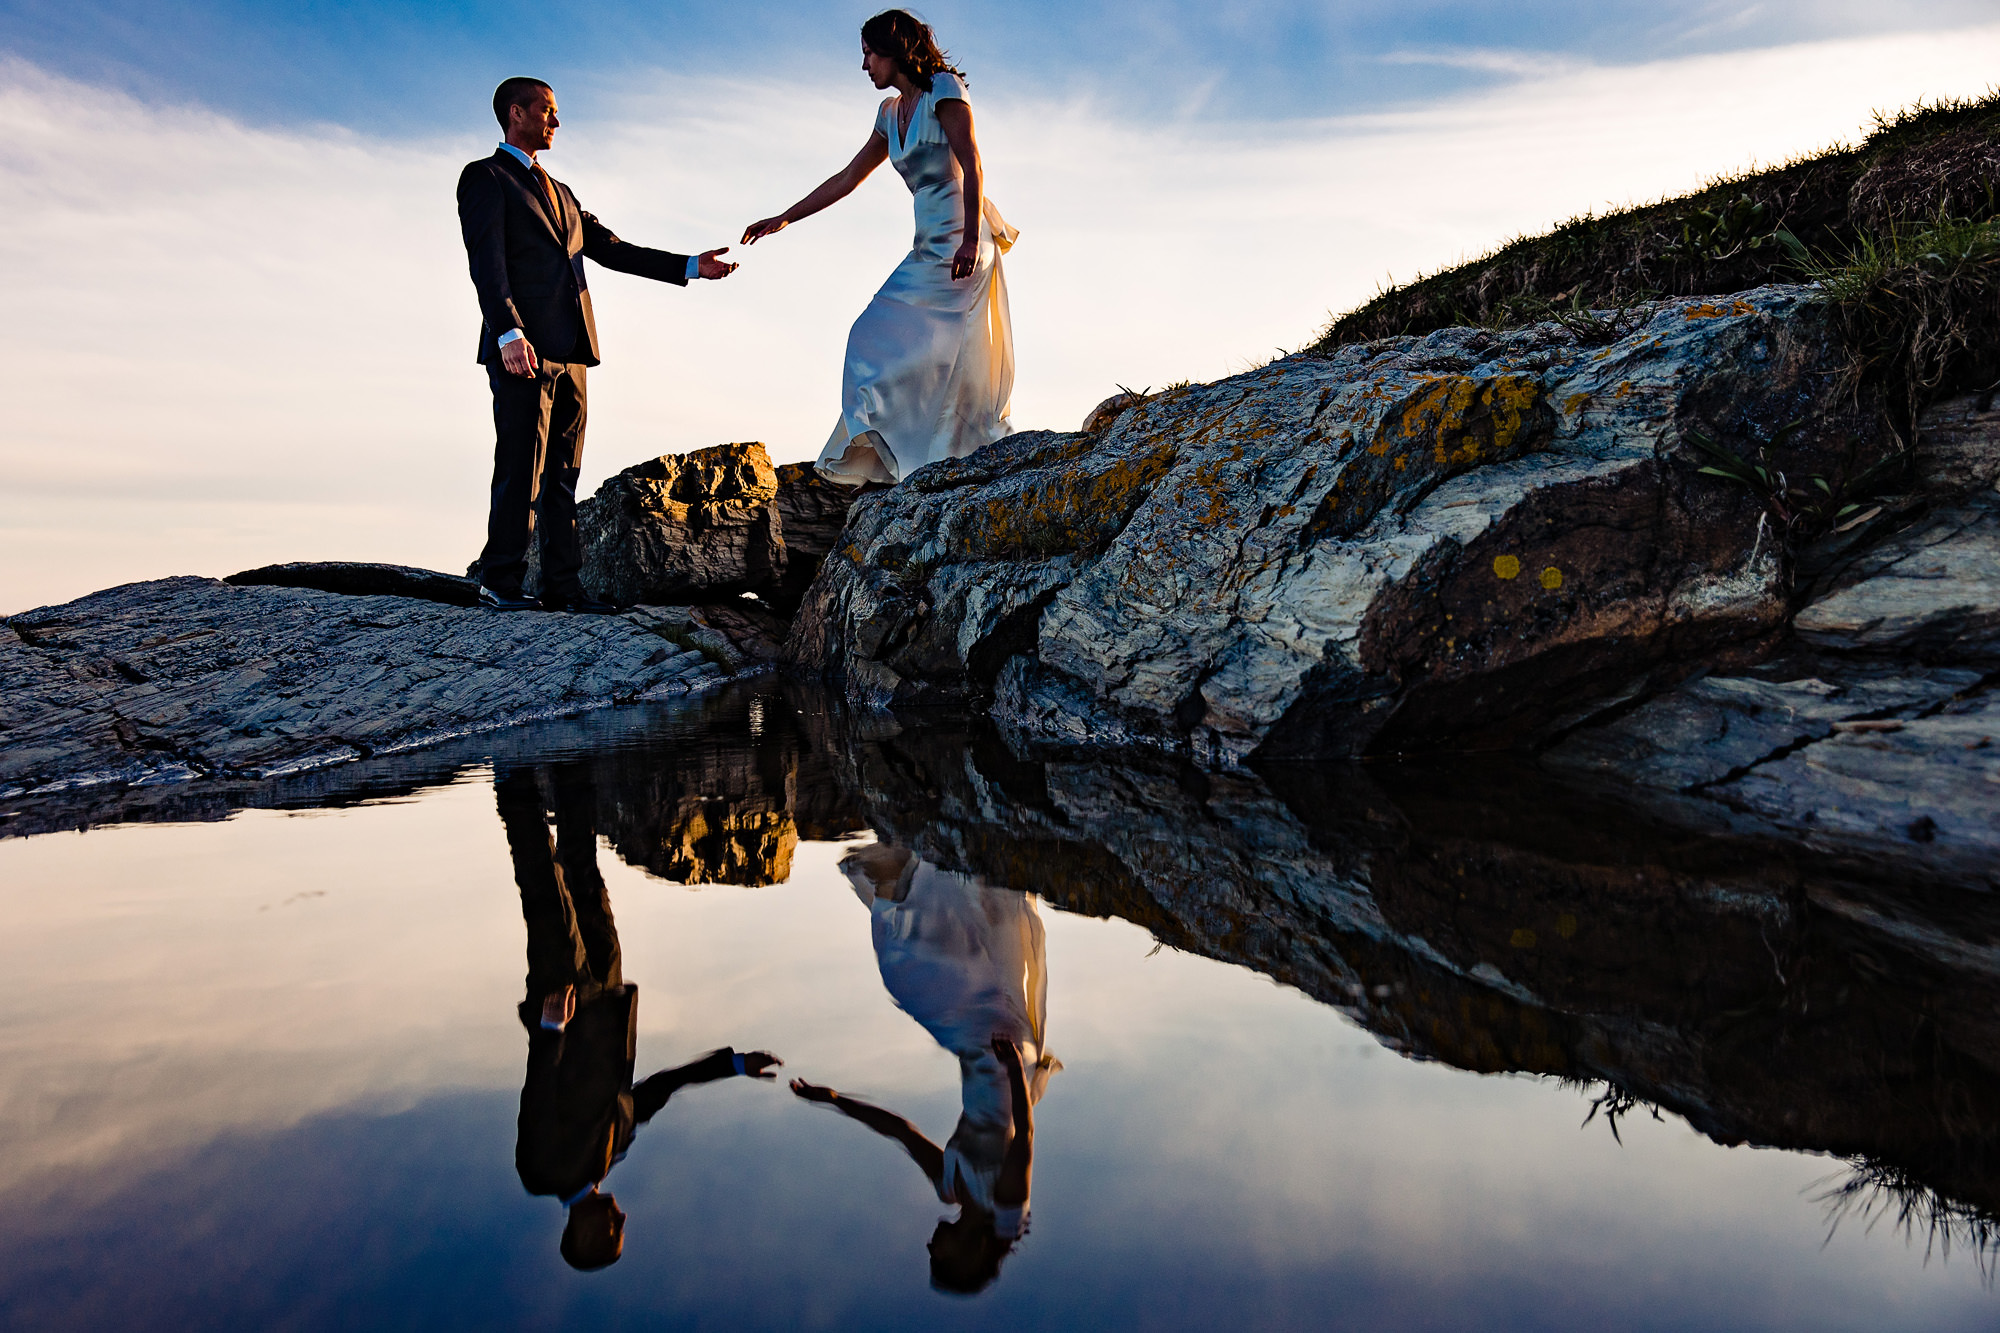 Best Maine wedding photography of 2021